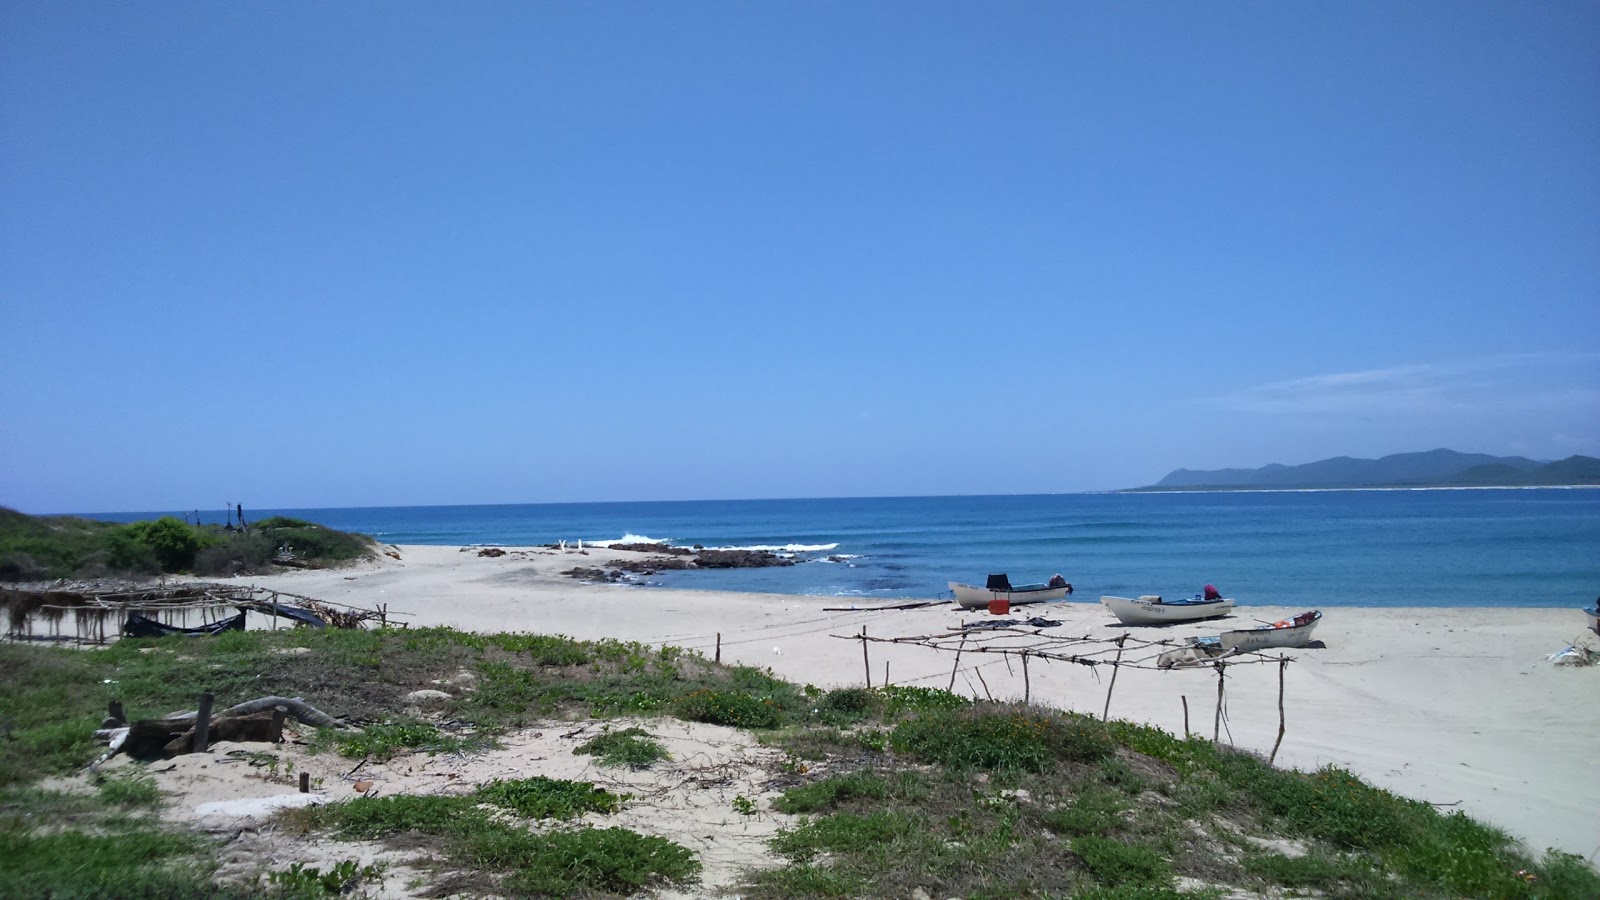 Fotografija Chalacatepec beach z turkizna čista voda površino